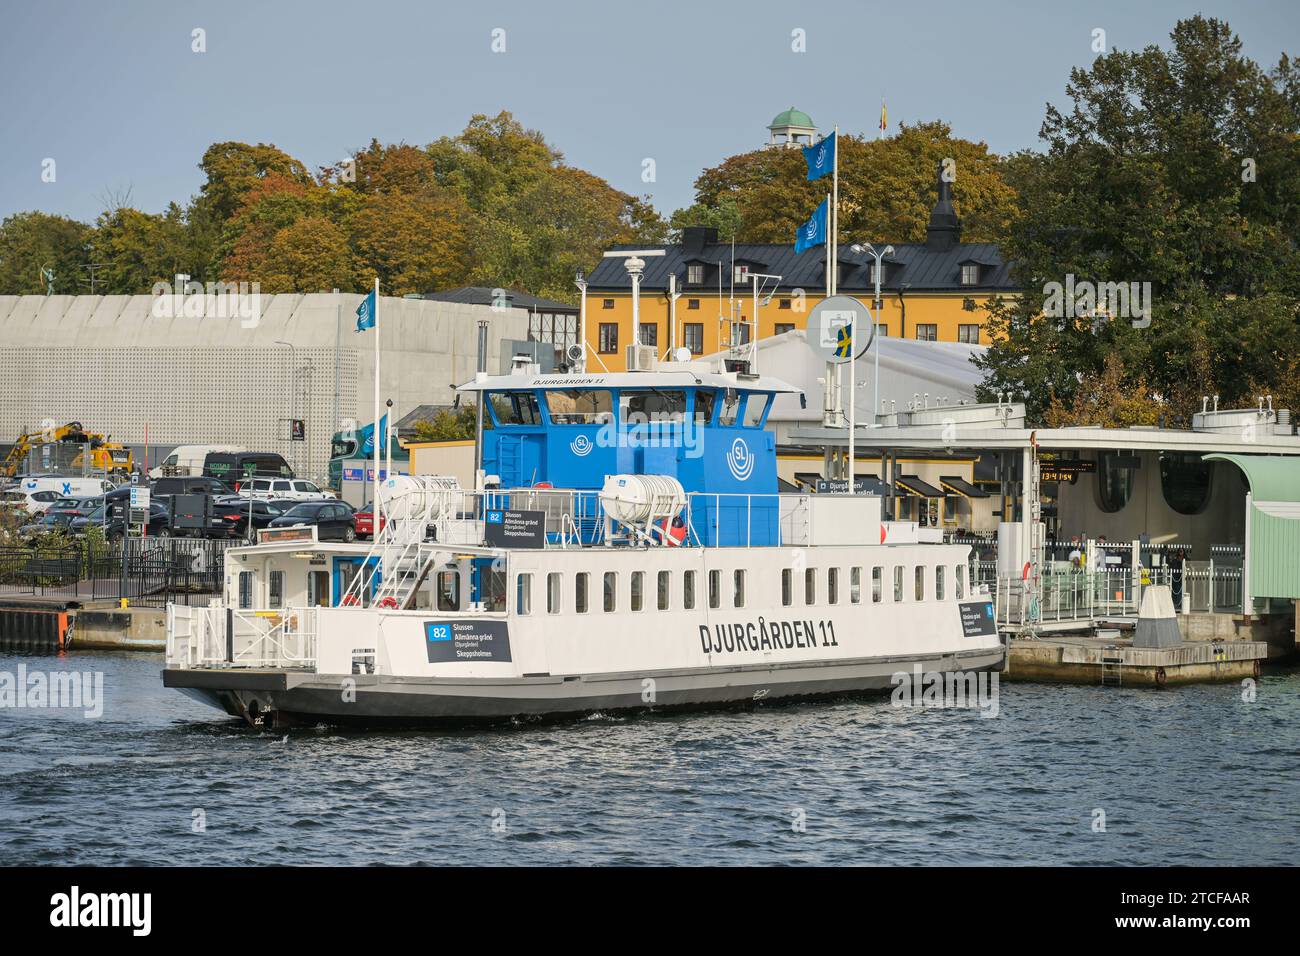 Fährschiff Djurgarden 11, Anleger Djurgarden, Stockholm, Schweden *** Ferry Djurgarden 11, Djurgarden jetty, Stockholm, Sweden Stock Photo